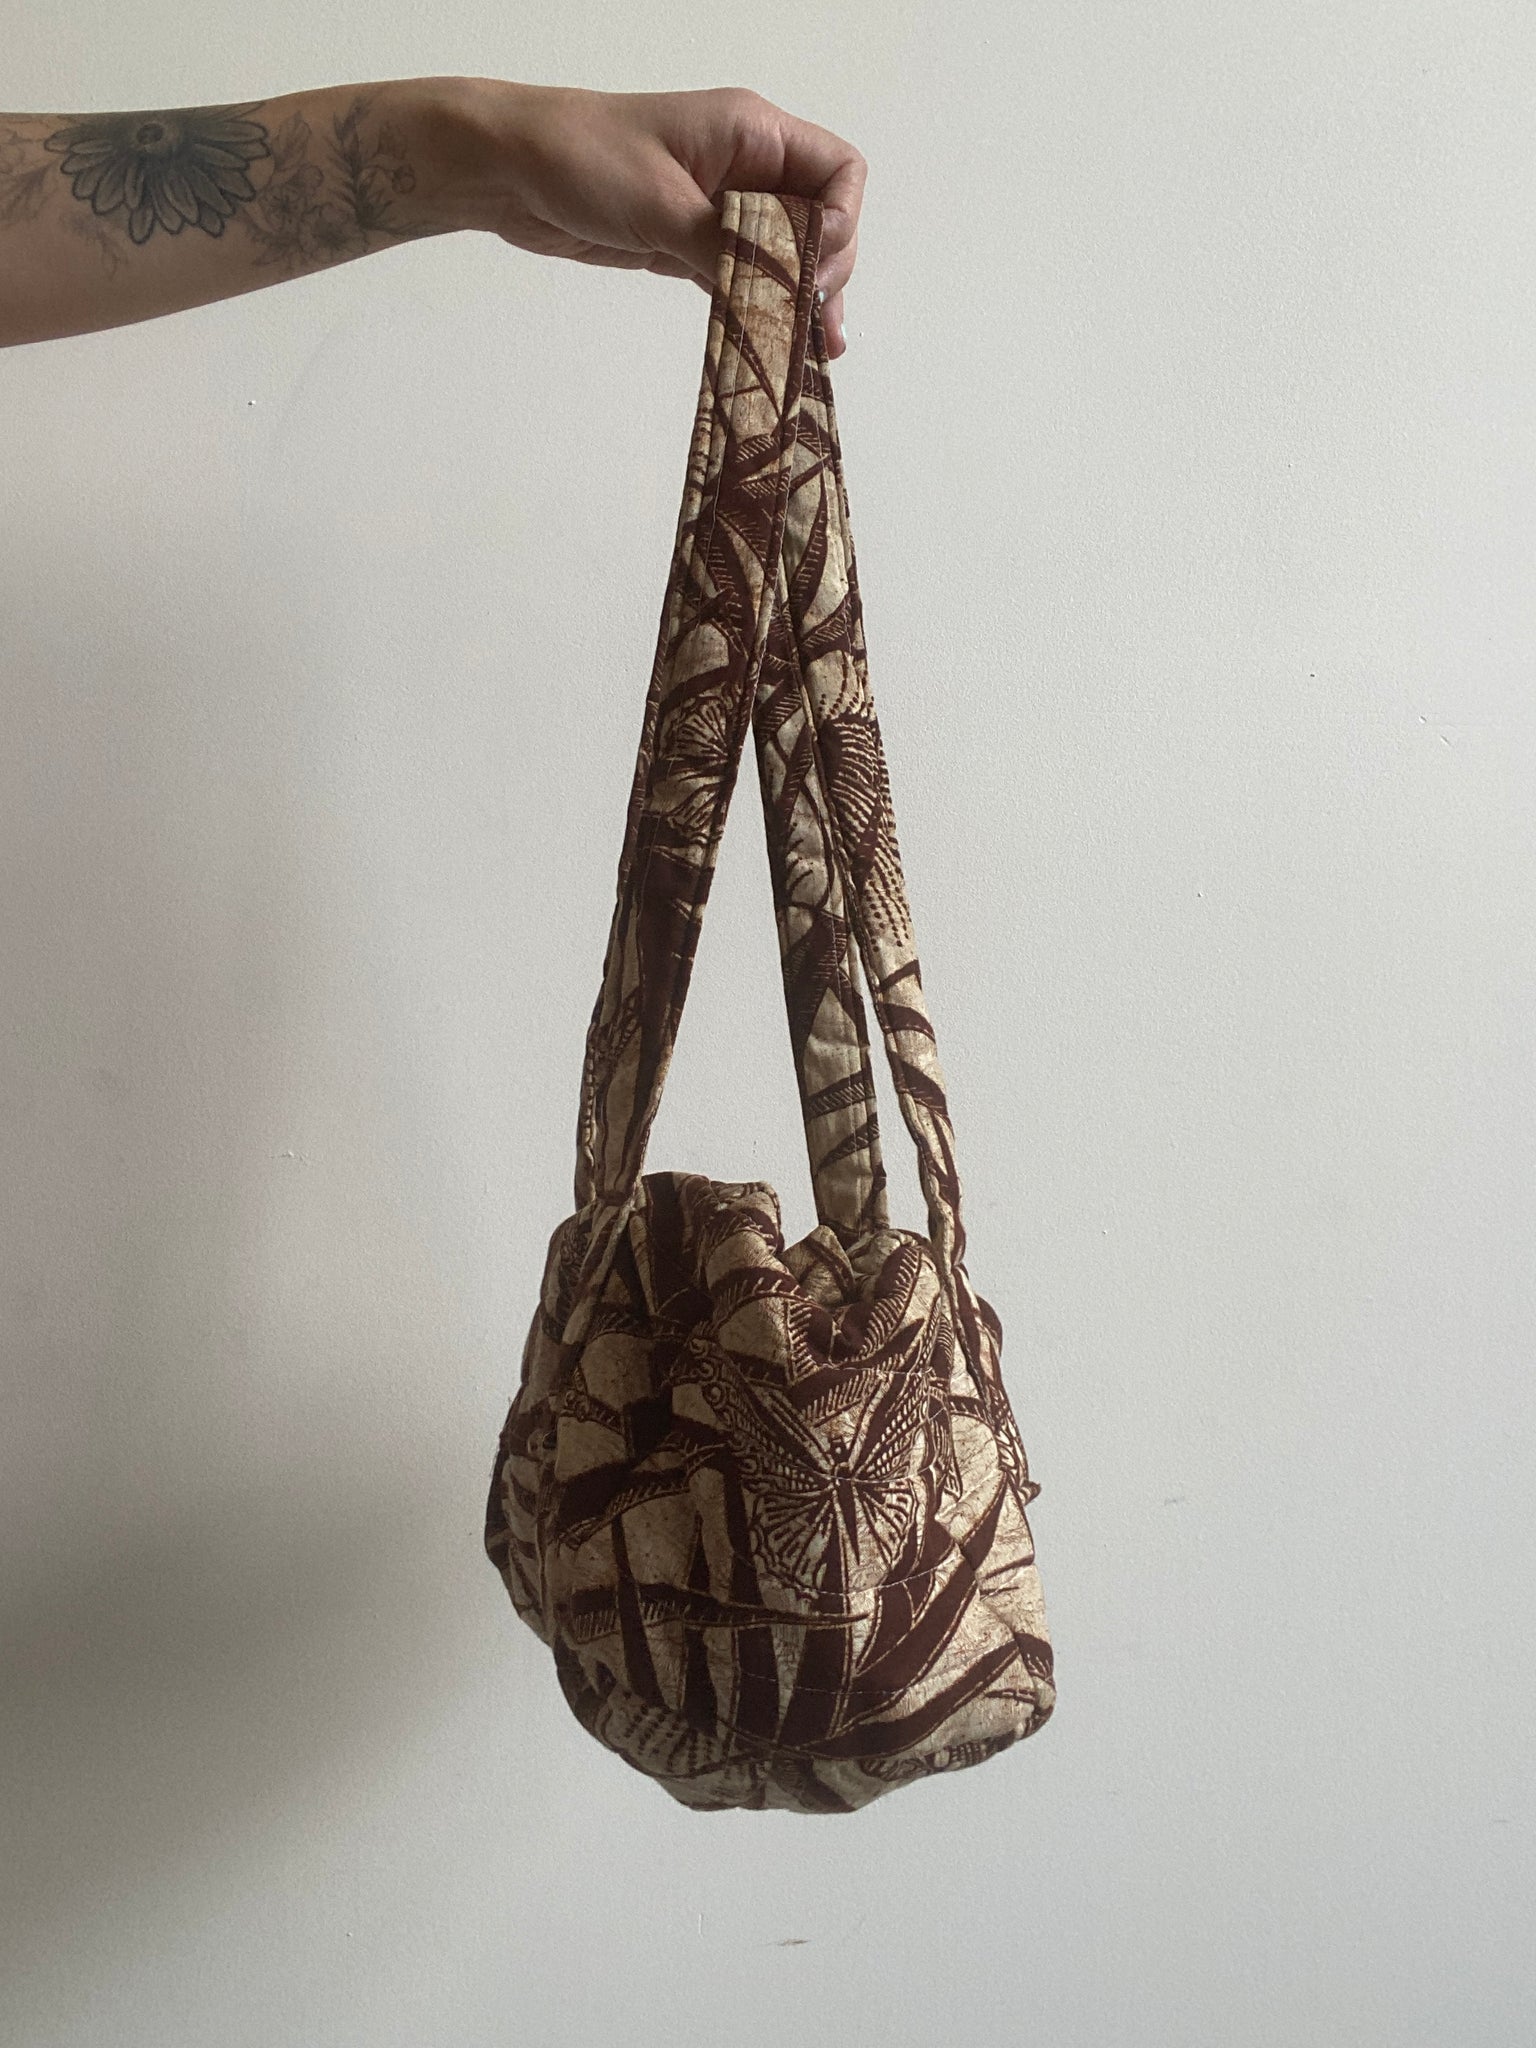 Cocopeaunts Luxury Designer Handbag for Women Winter New Fashion Underarm Bag Solid Color Simple Semi-Circular Trend Lady Shoulder Bag, Adult Unisex